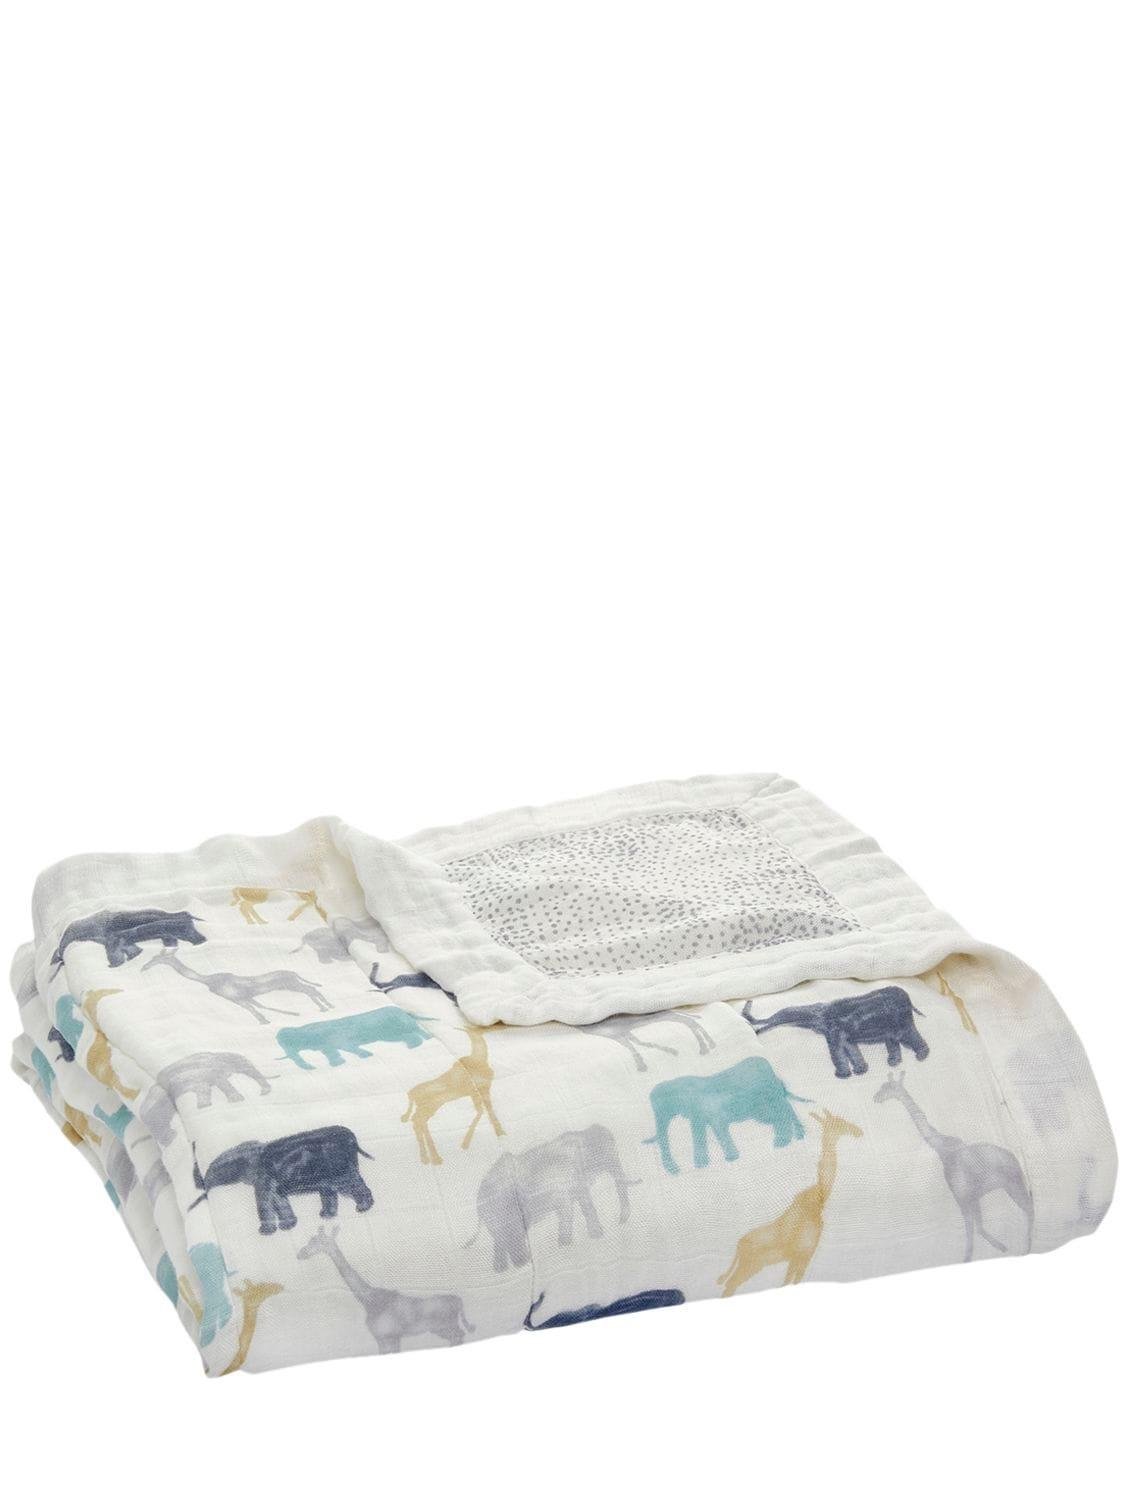 Dumbo Print Bamboo Viscose Blanket by ADEN + ANAIS